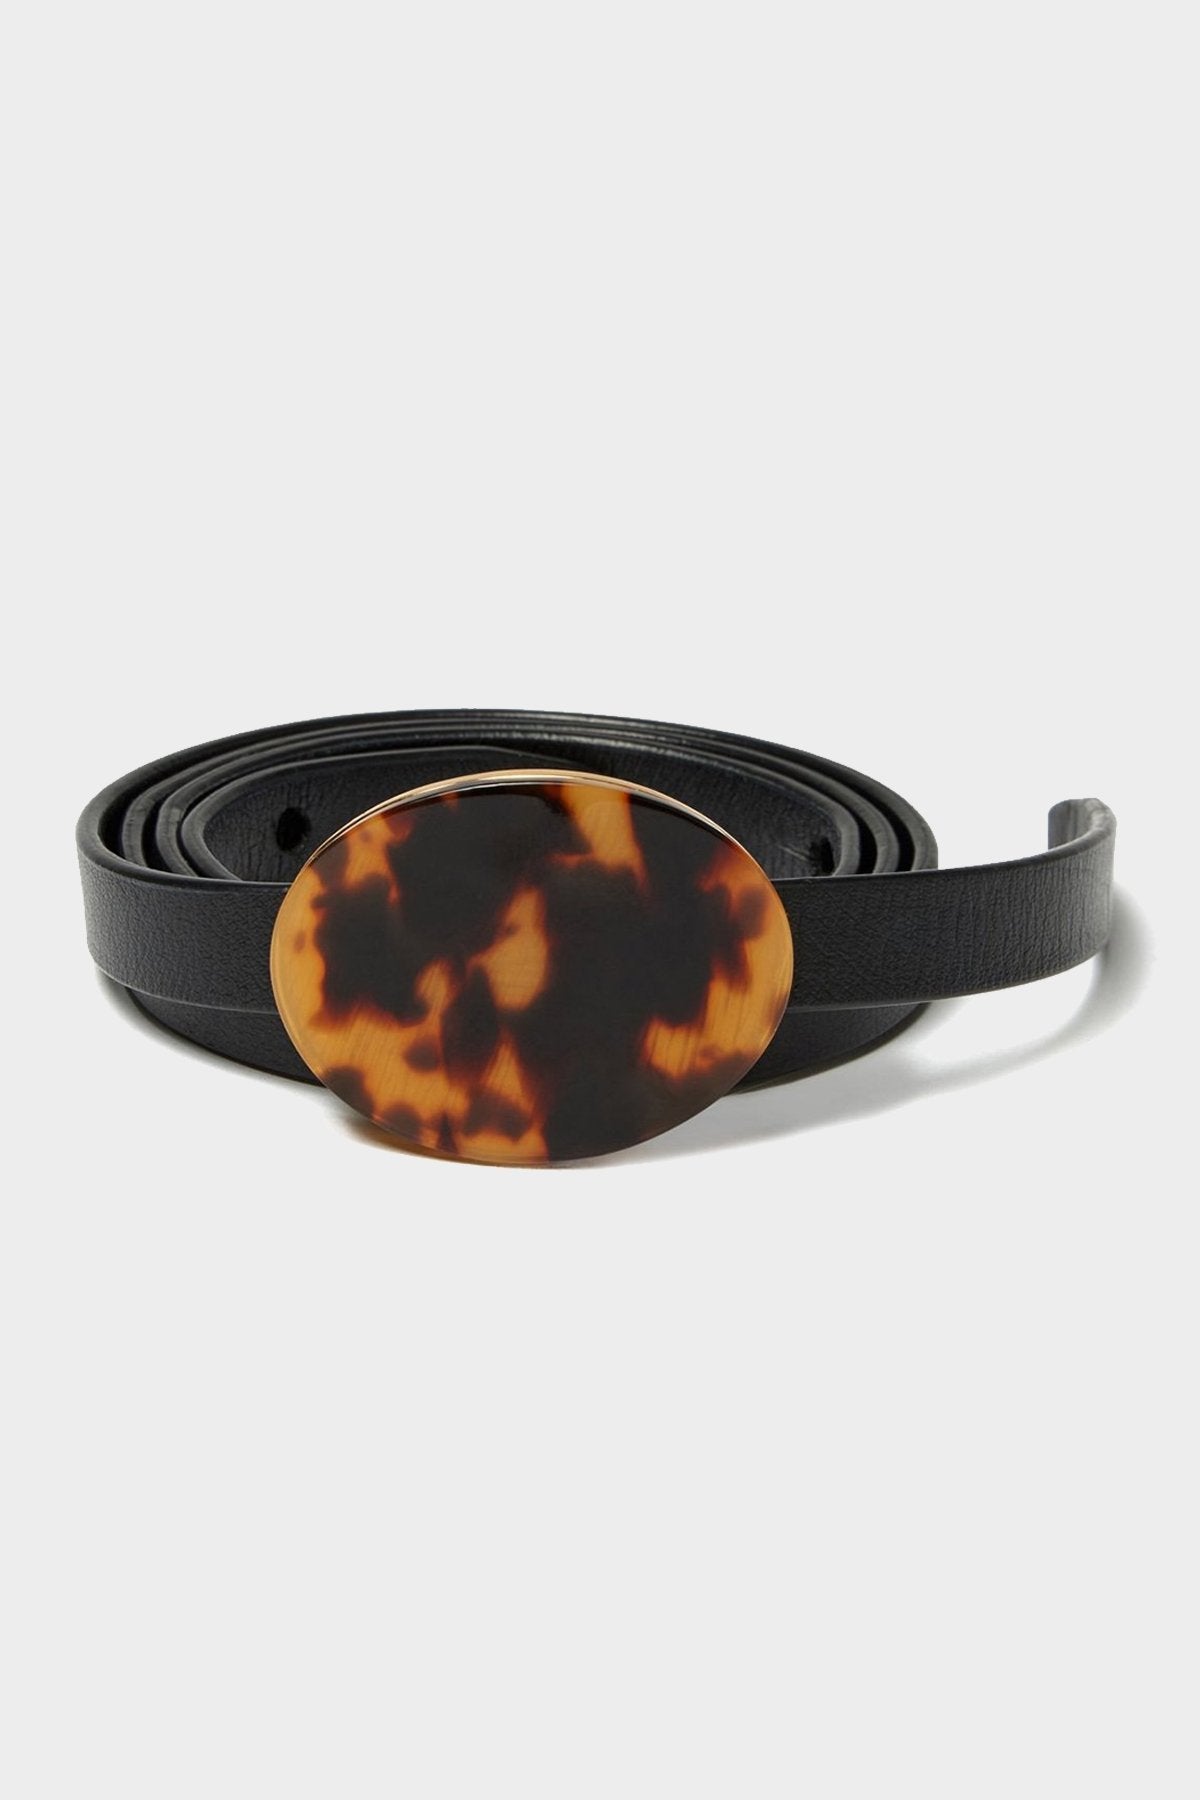 Orbit Belt in Black and Tortoise - shop-olivia.com